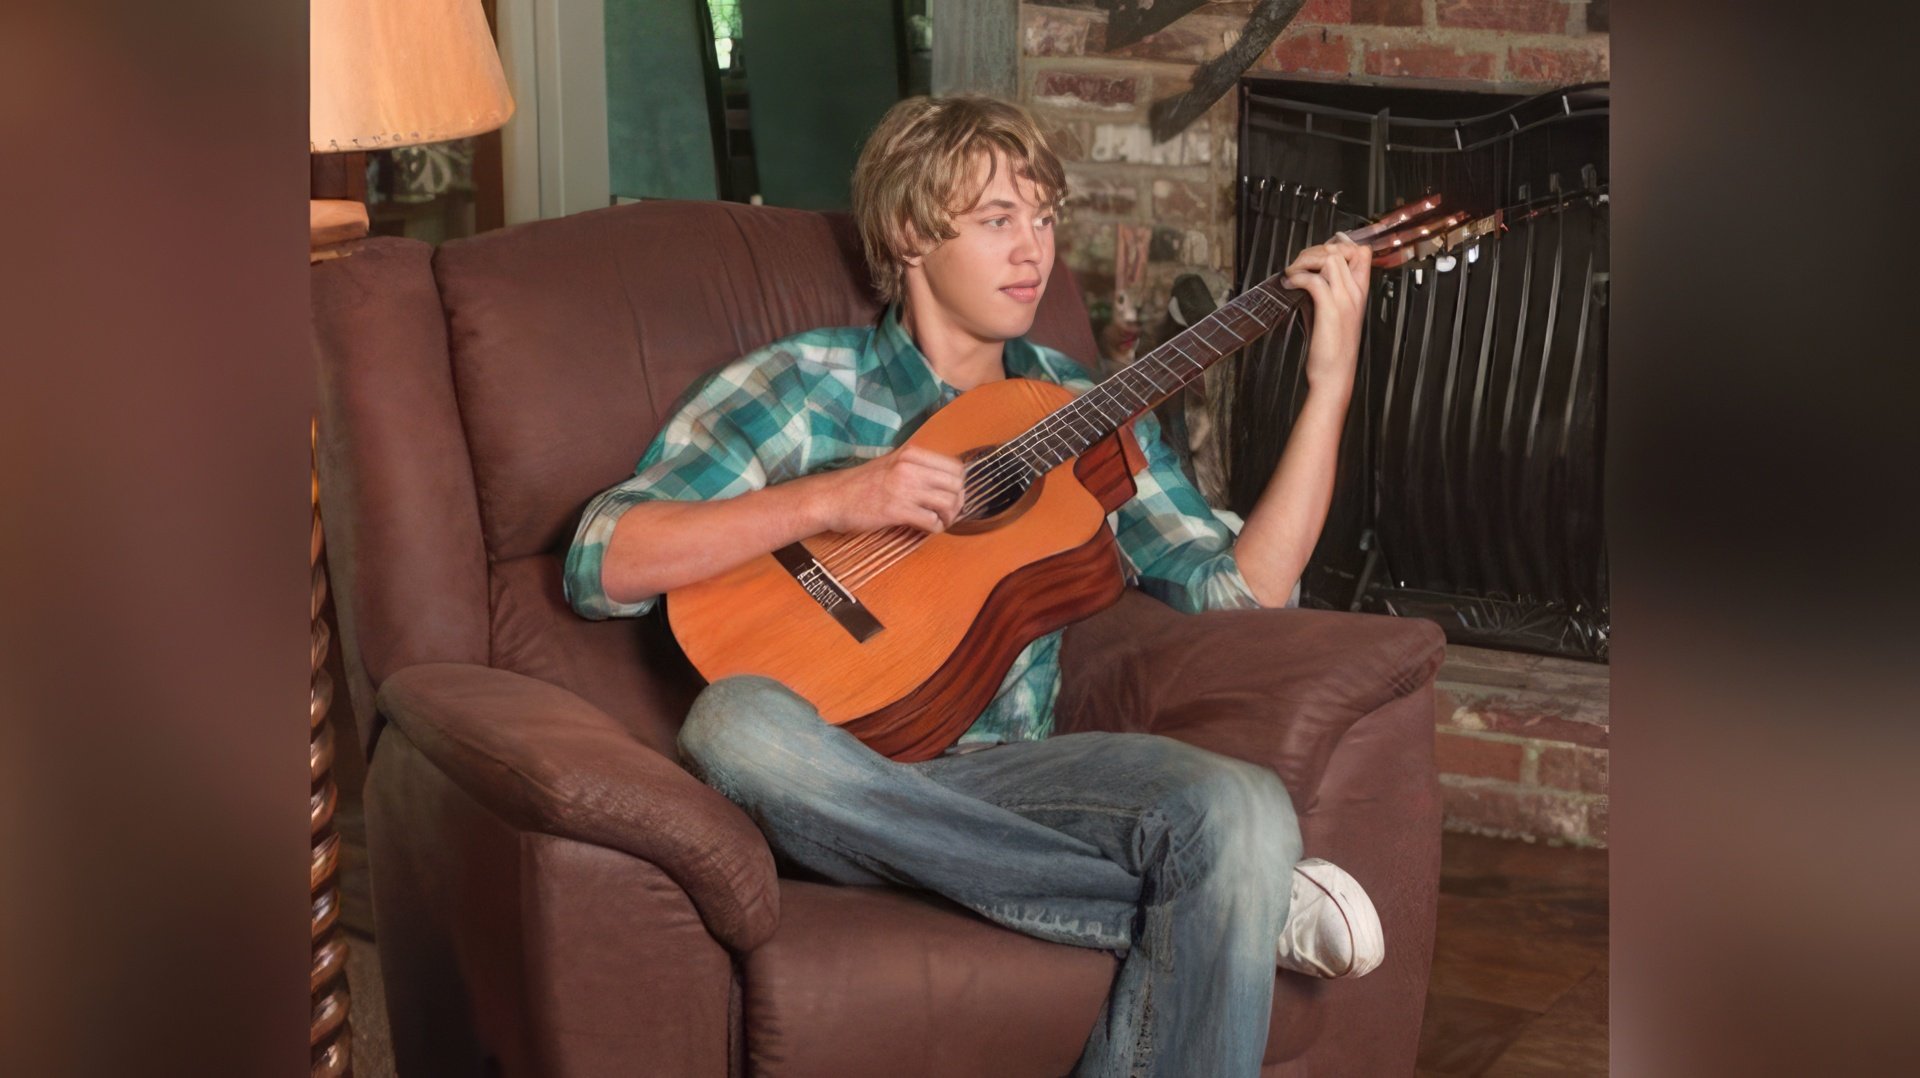 Austin plays the guitar since childhood